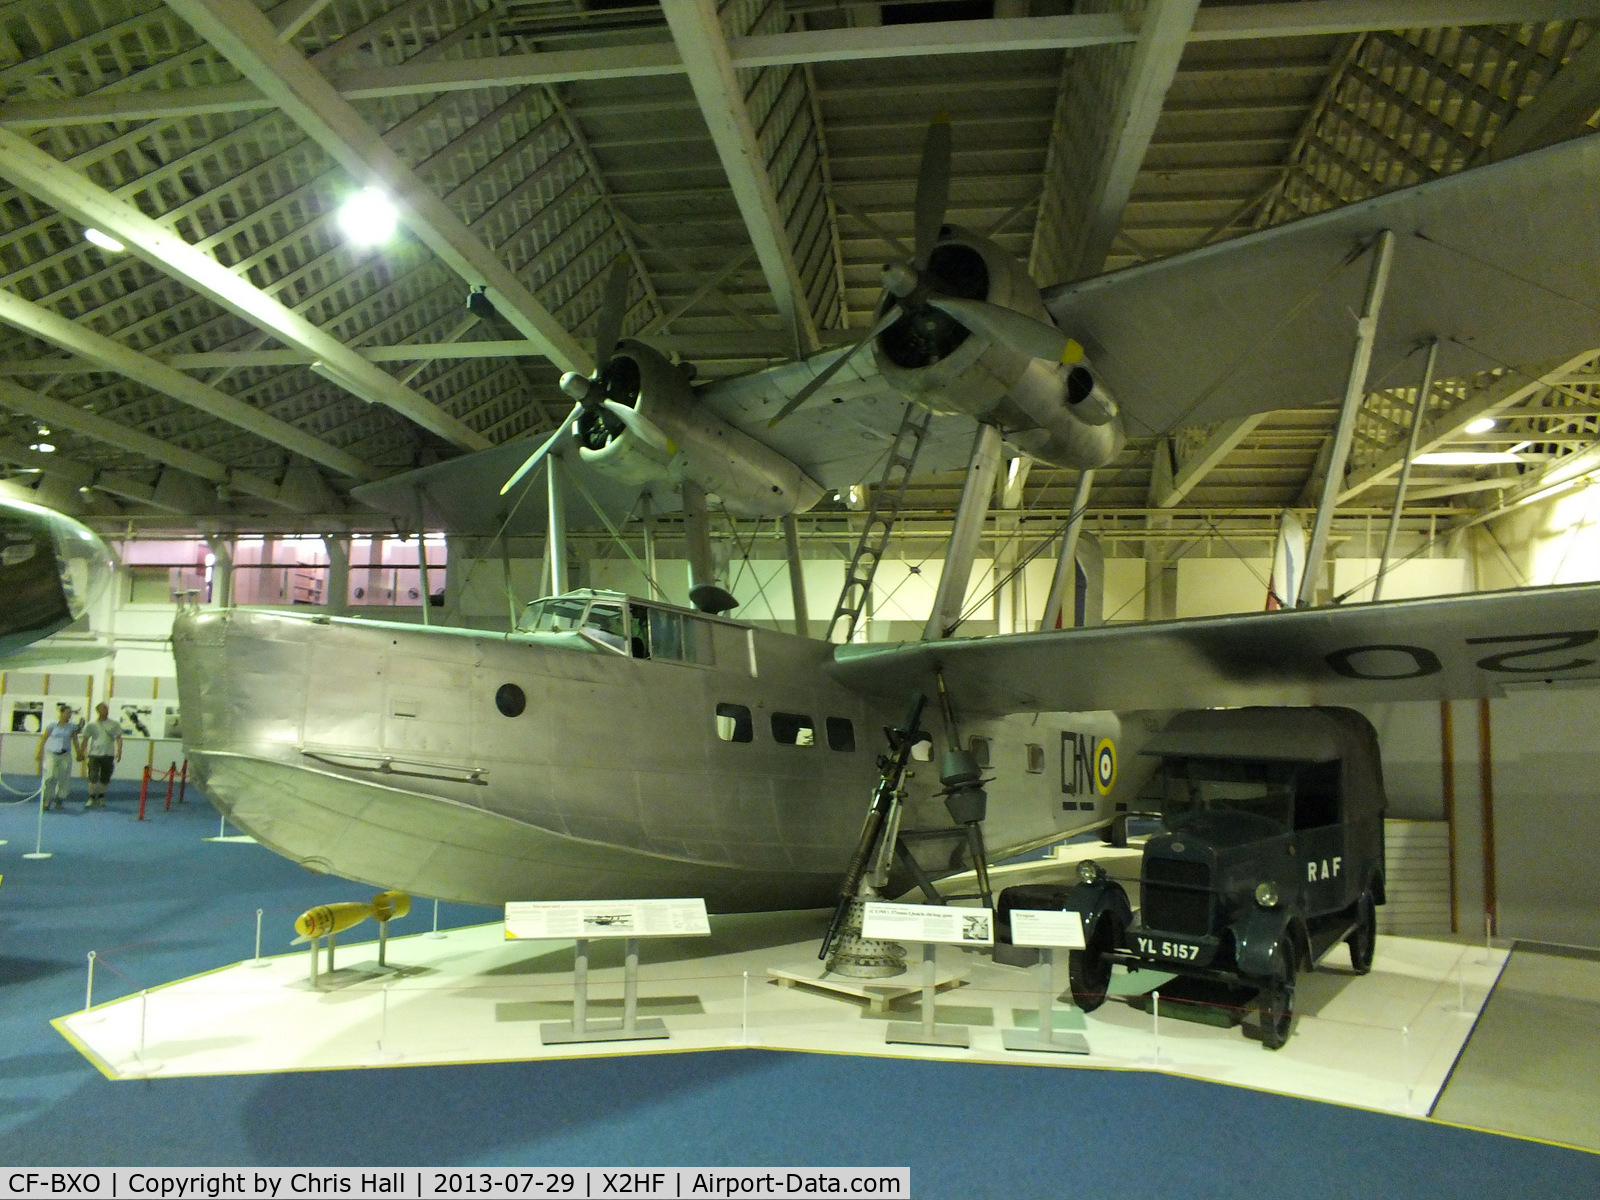 CF-BXO, 1940 Supermarine Stranraer C/N CV 209, Displayed at the RAF Museum, Hendon